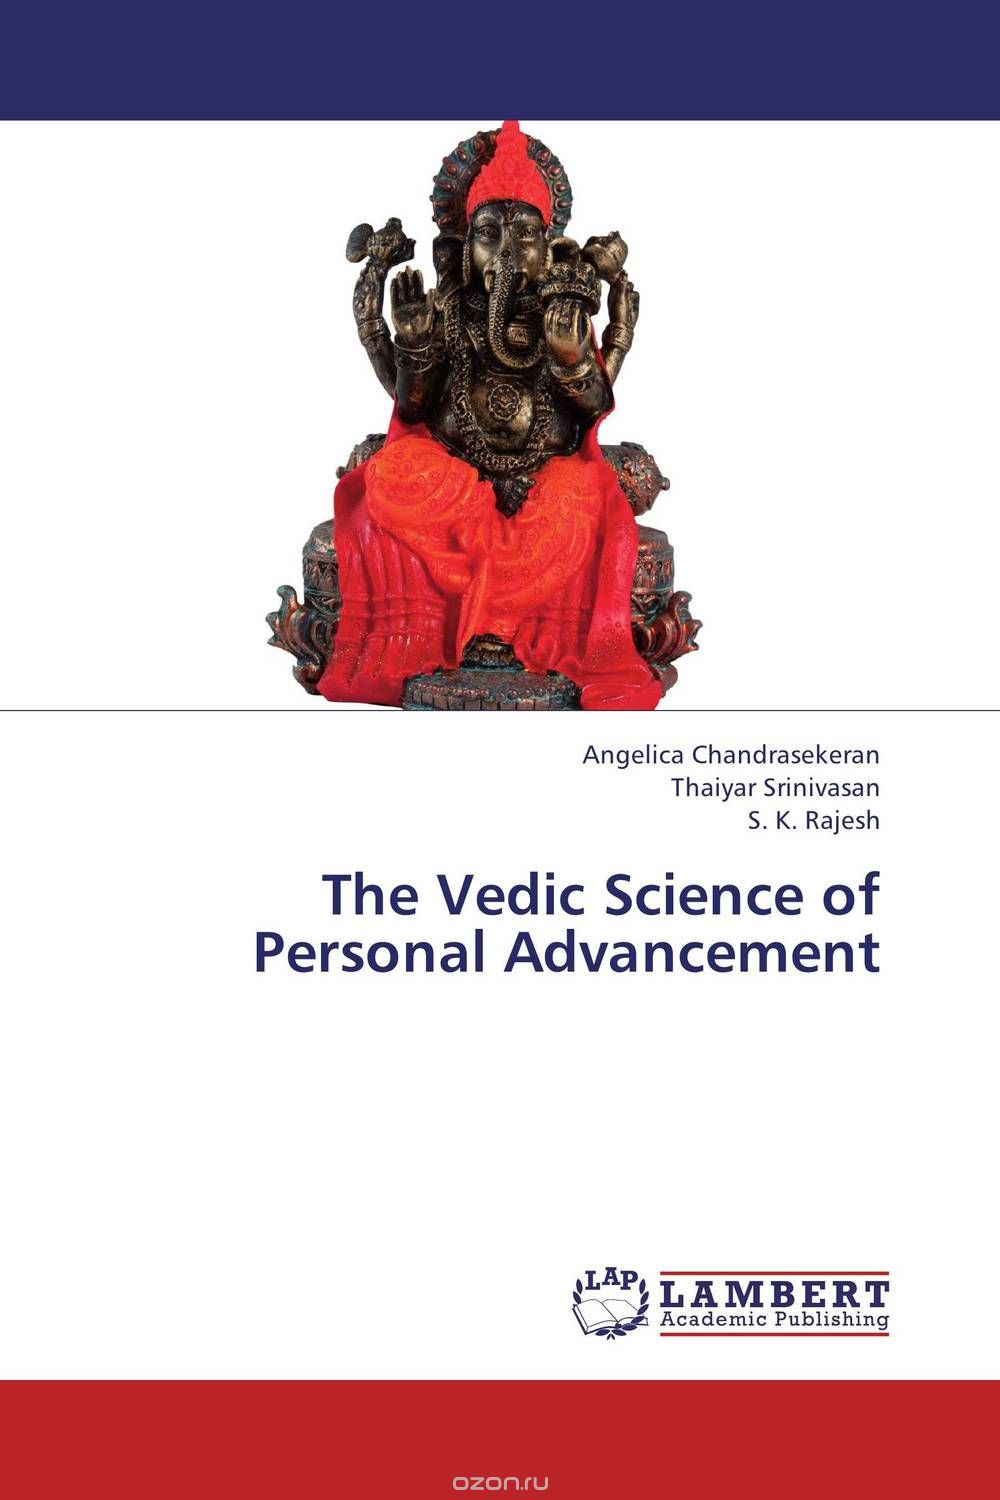 Скачать книгу "The Vedic Science of Personal Advancement"